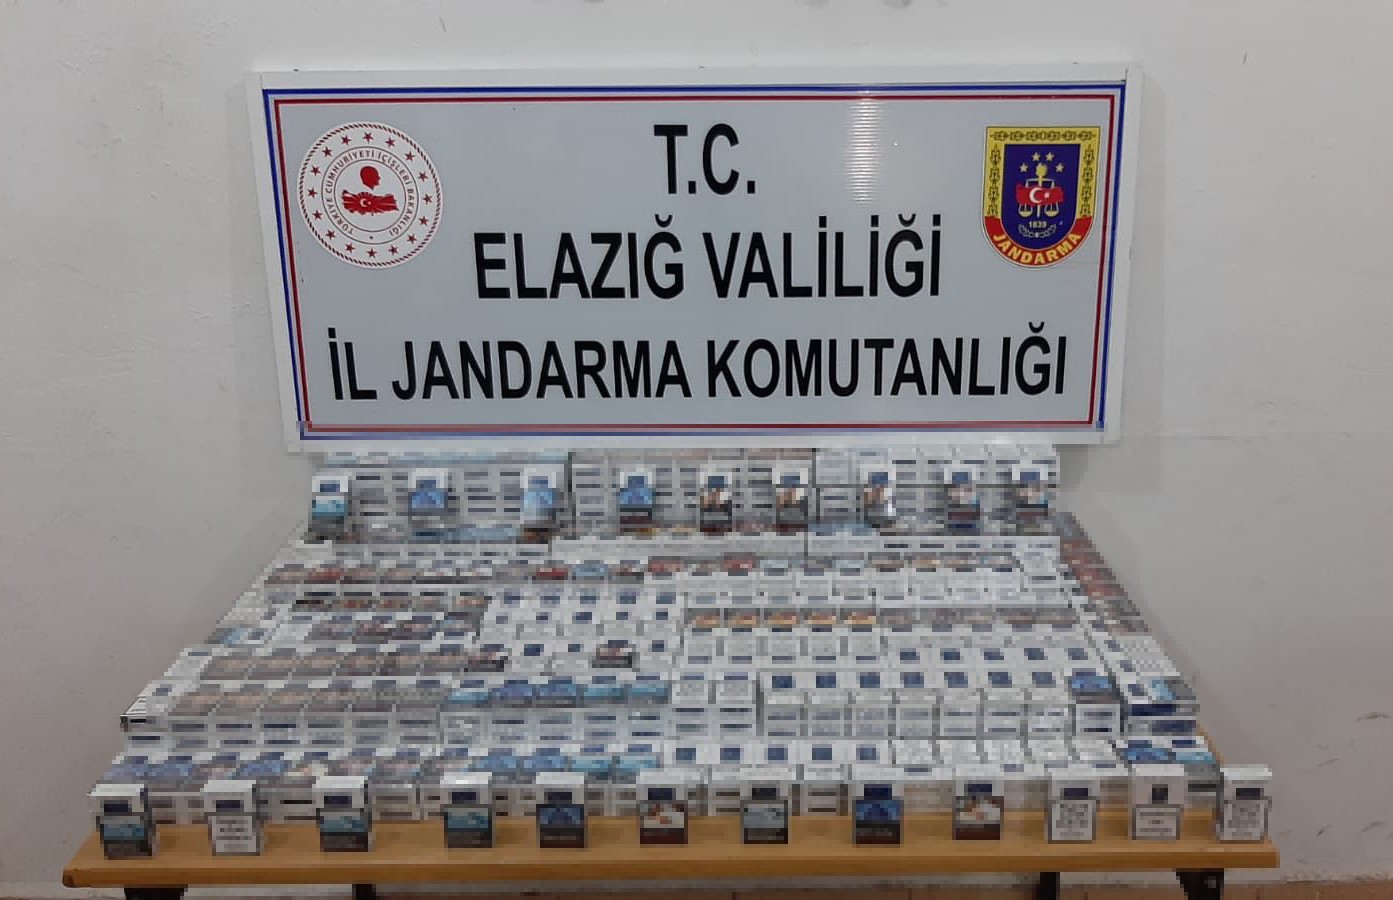 Elazığ’da 910 paket bandrolsüz sigara ele geçirildi #elazig